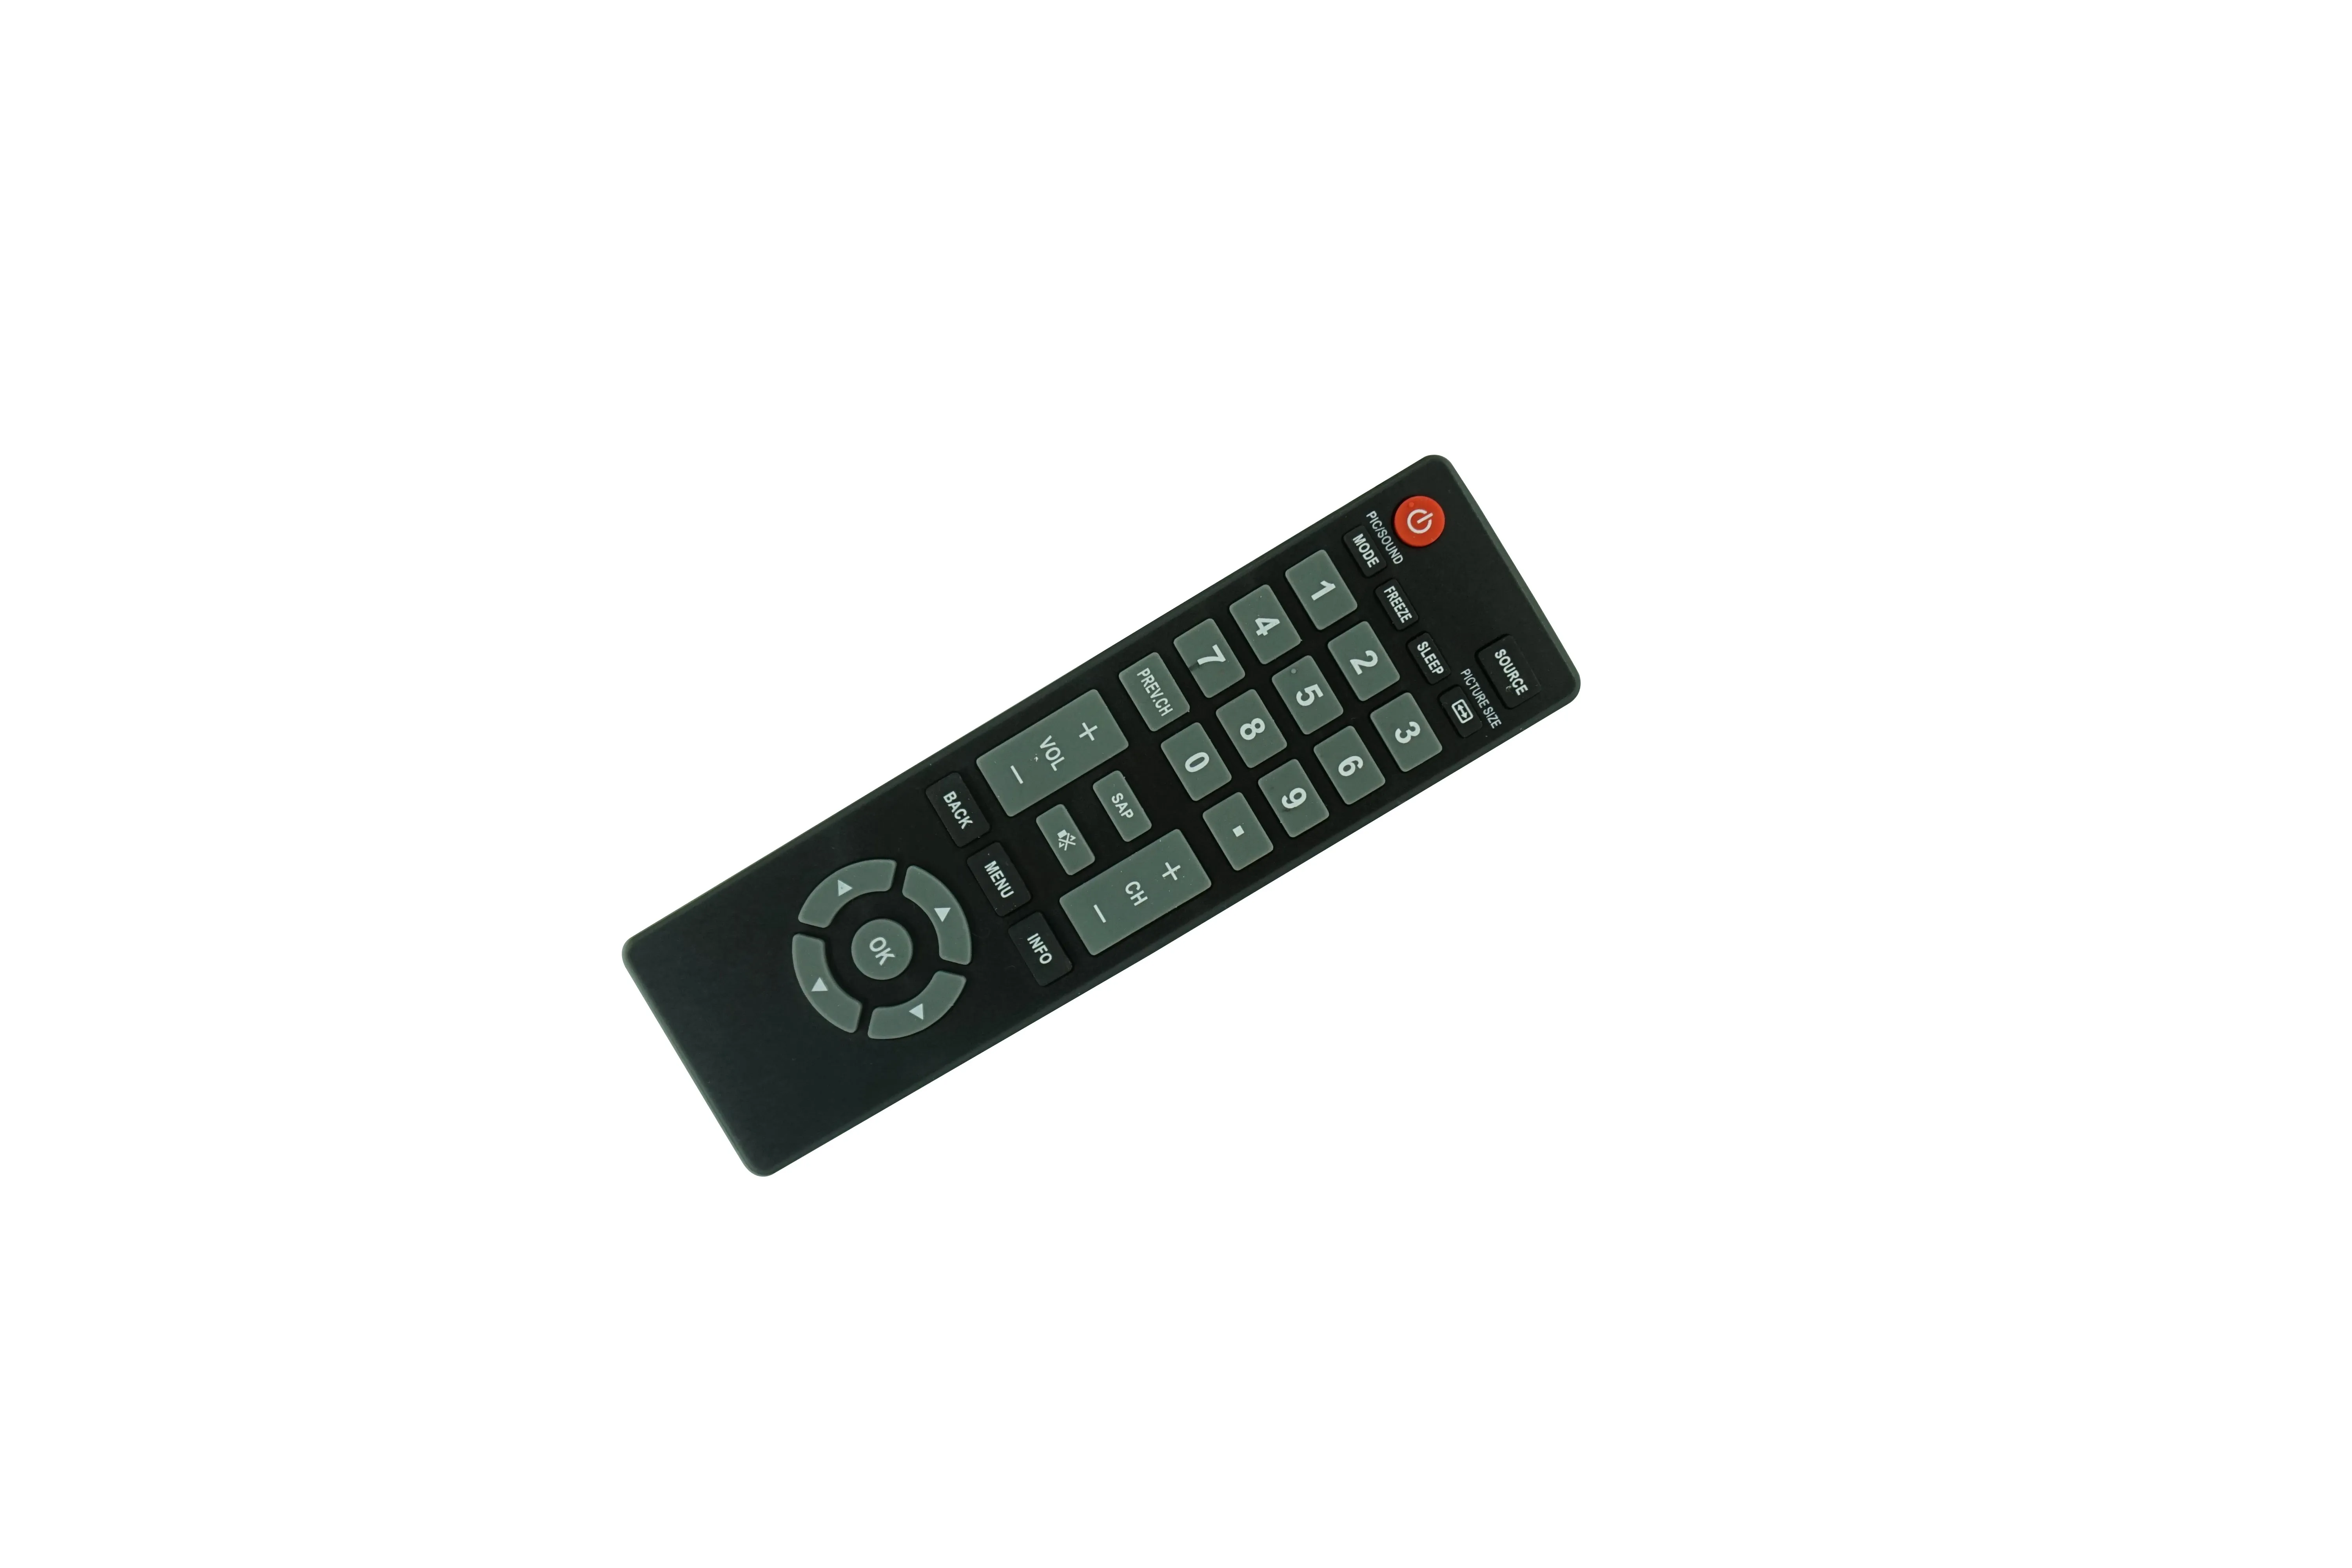 Remote Control For Emerson LE320EM4 LE290EM4 LE240EM4 LF280EM5 LF320EM4A LF320EM5S LF391EM4F LF401EM5 LF501EM5 LF501EM5F LF551EM5 Smart 1080p UHD LED HDTV TV